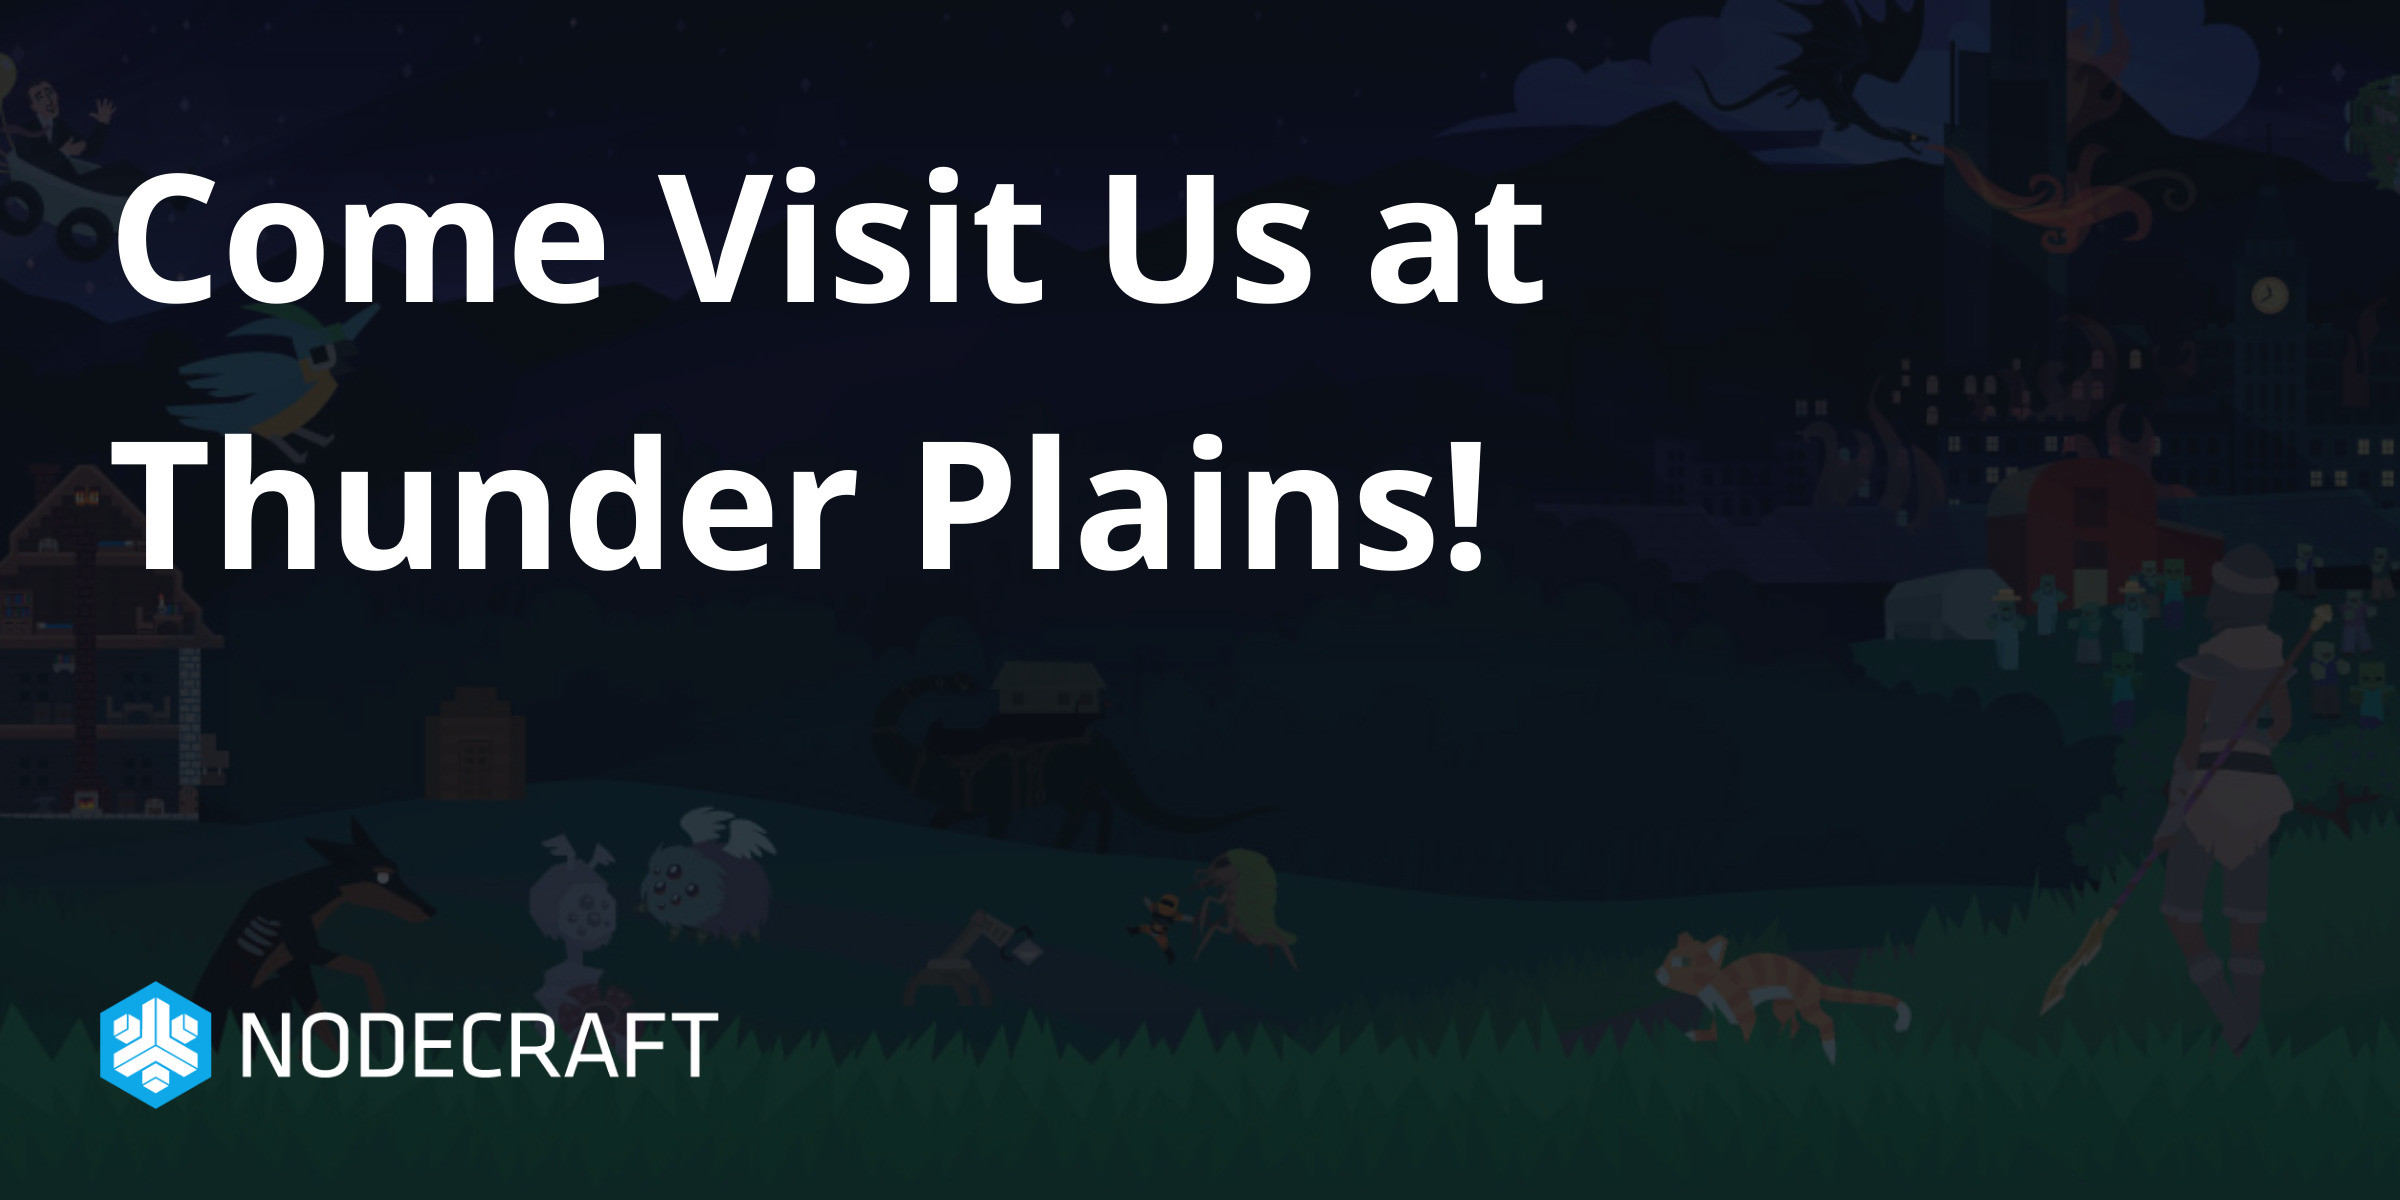 Come Visit Us at Thunder Plains!